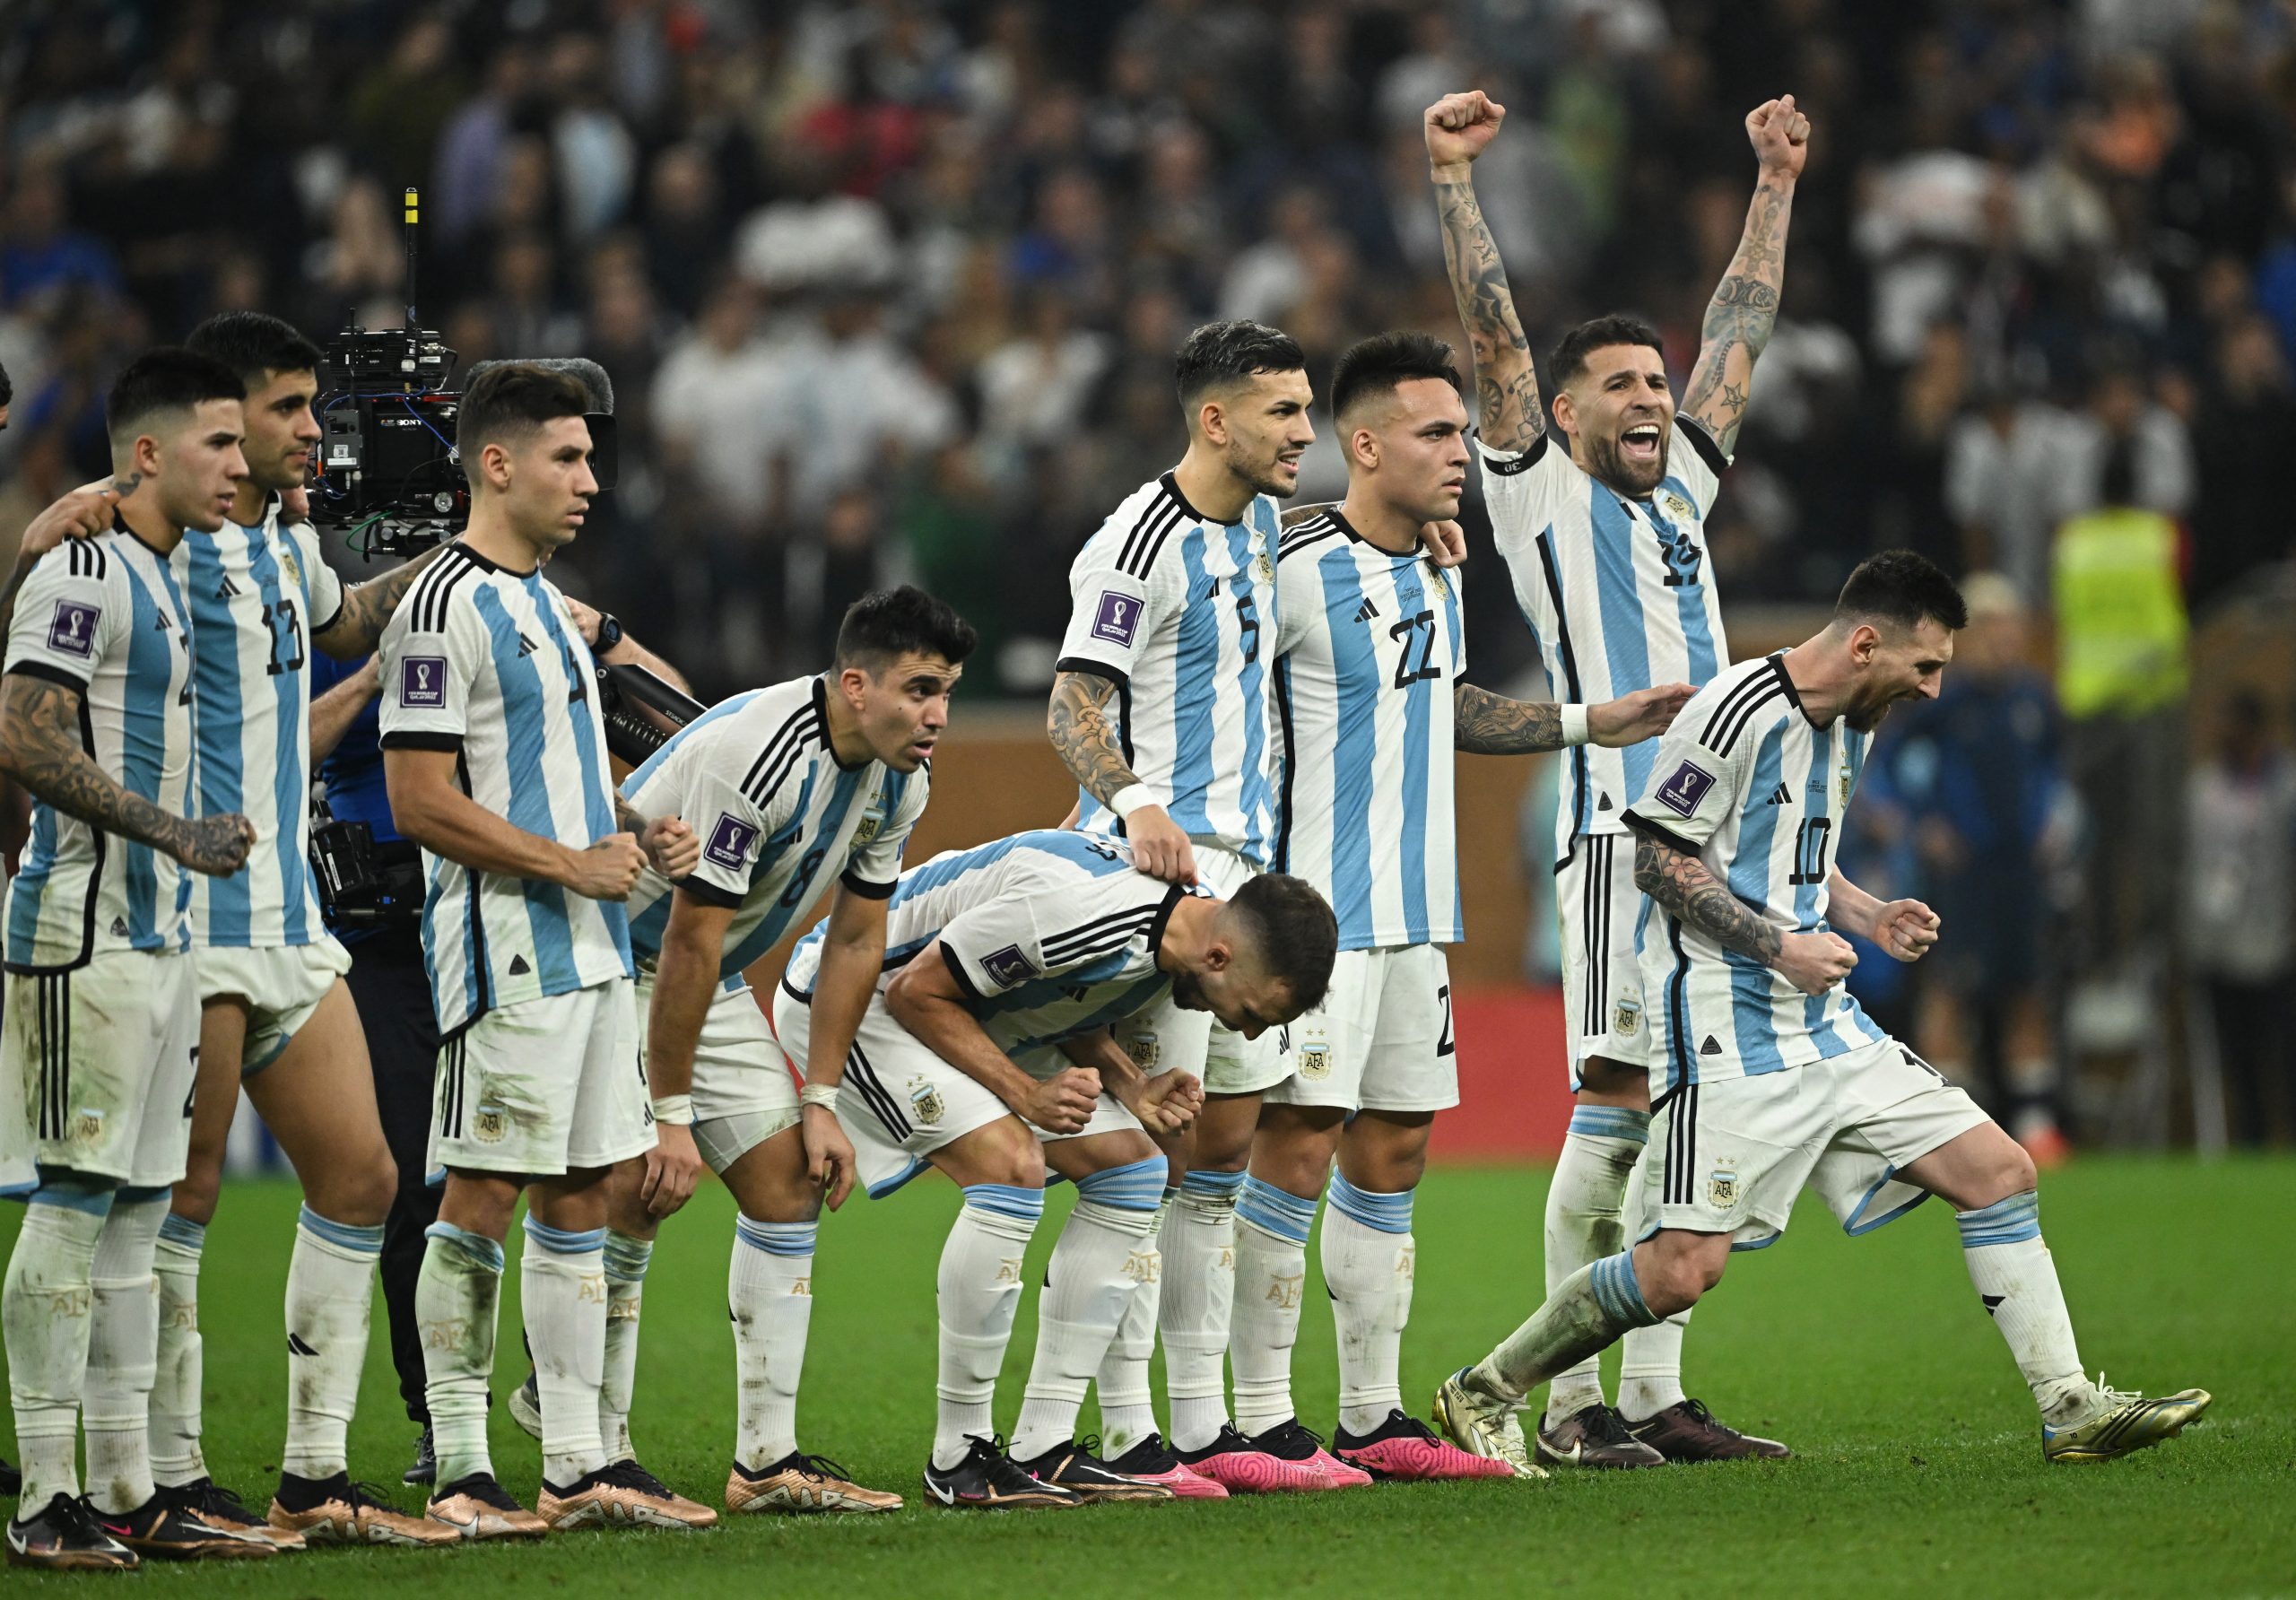 Аргентина сколько раз чемпион по футболу. Месси Аргентина 2022 чемпион. Месси сборная Аргентины ЧМ 2022. Сборная Аргентины на ЧМ 2022.